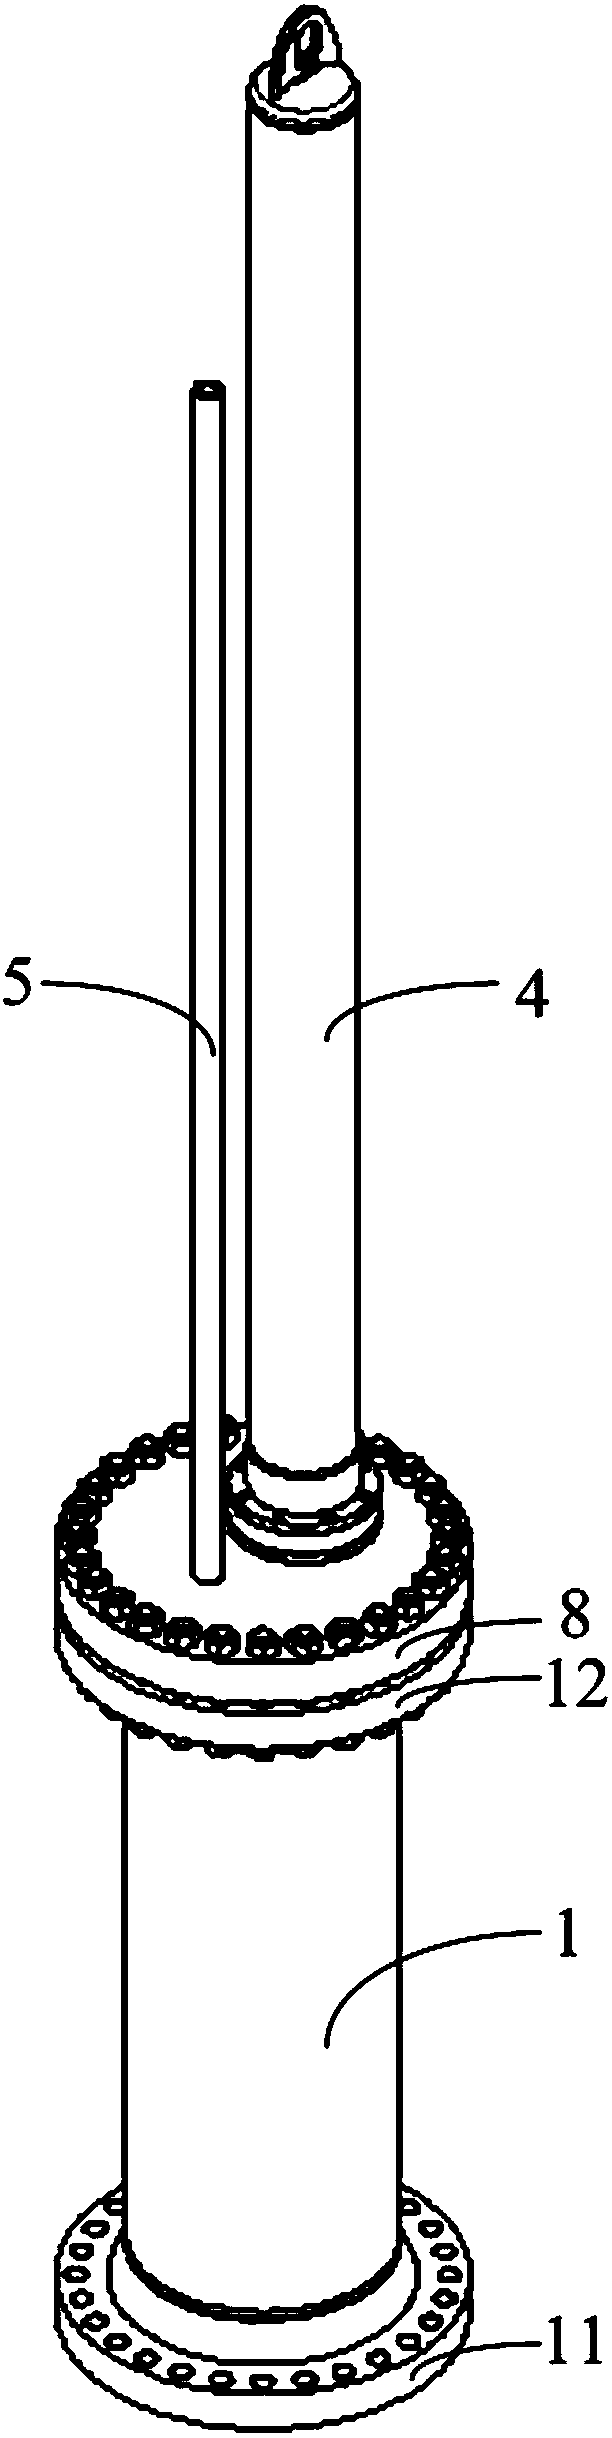 Pipeline plug feeding mechanism